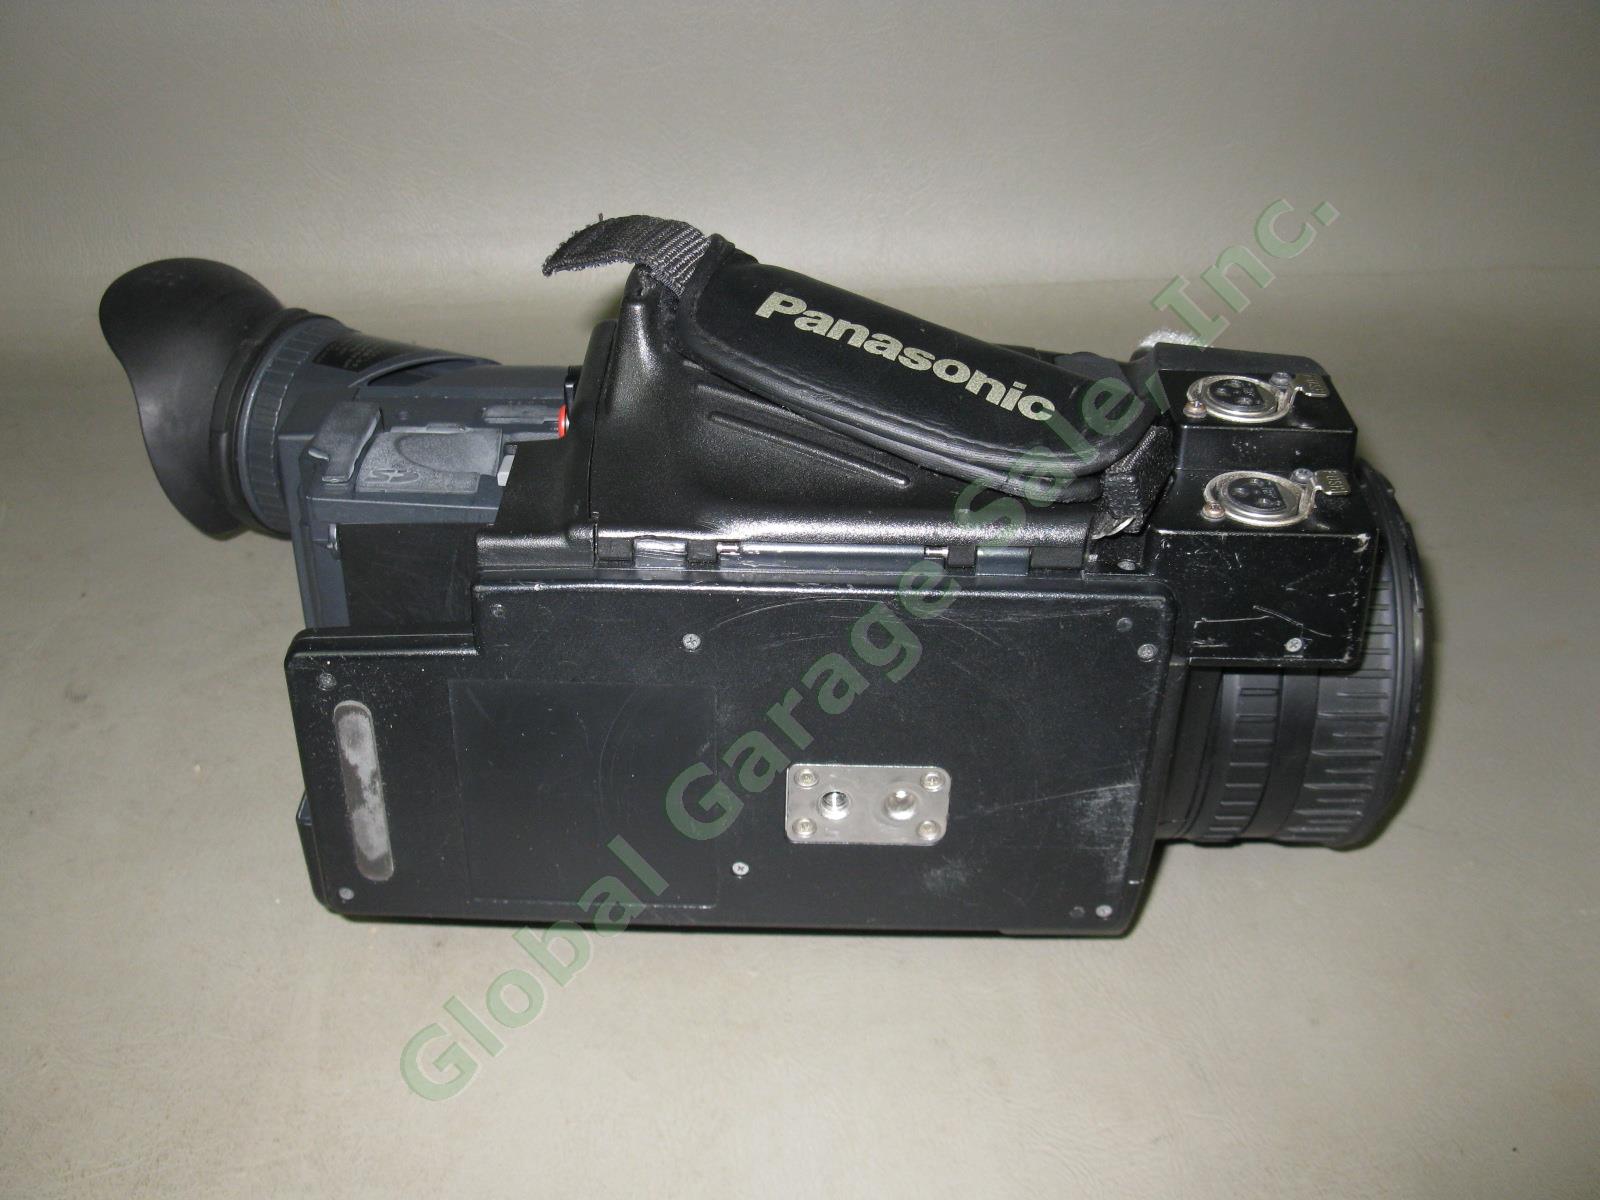 Panasonic AG-HVX200P DVCPRO 3CCD HD P2 MiniDV Pro Camcorder Video Camera Bundle 10